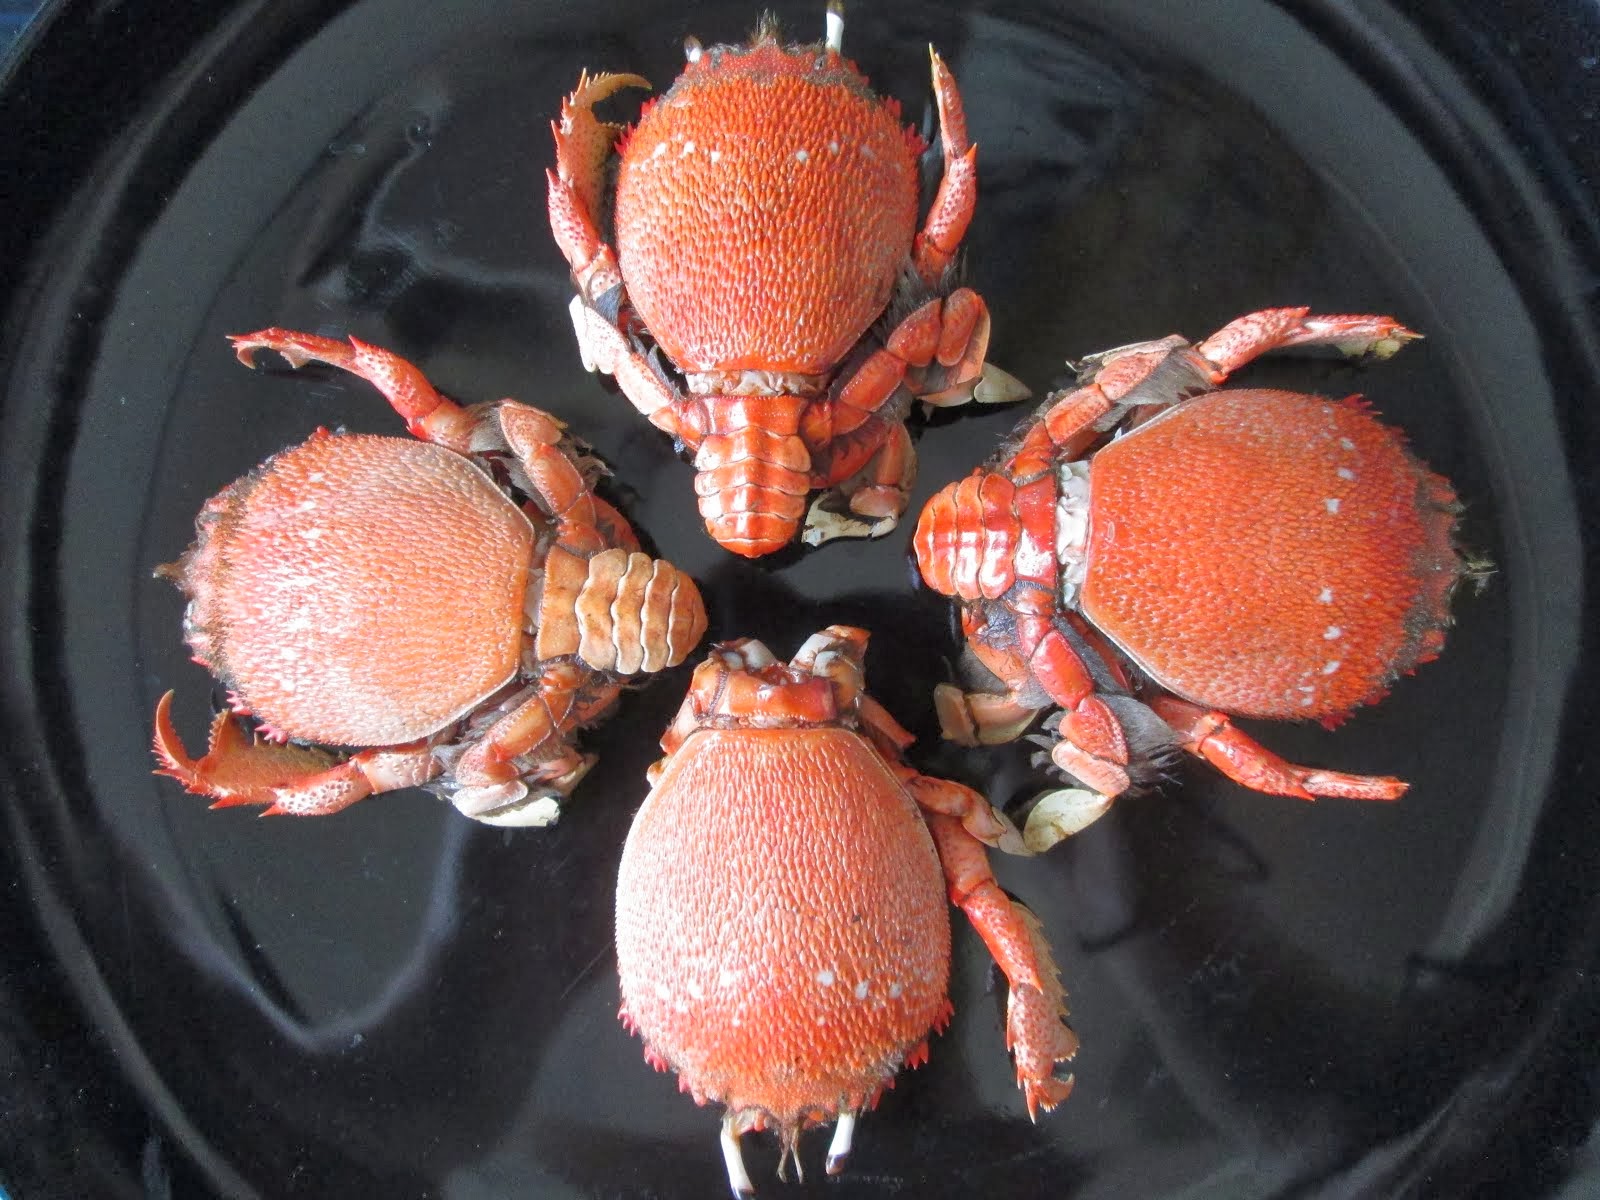 Some Tasty Crab/Shrimp